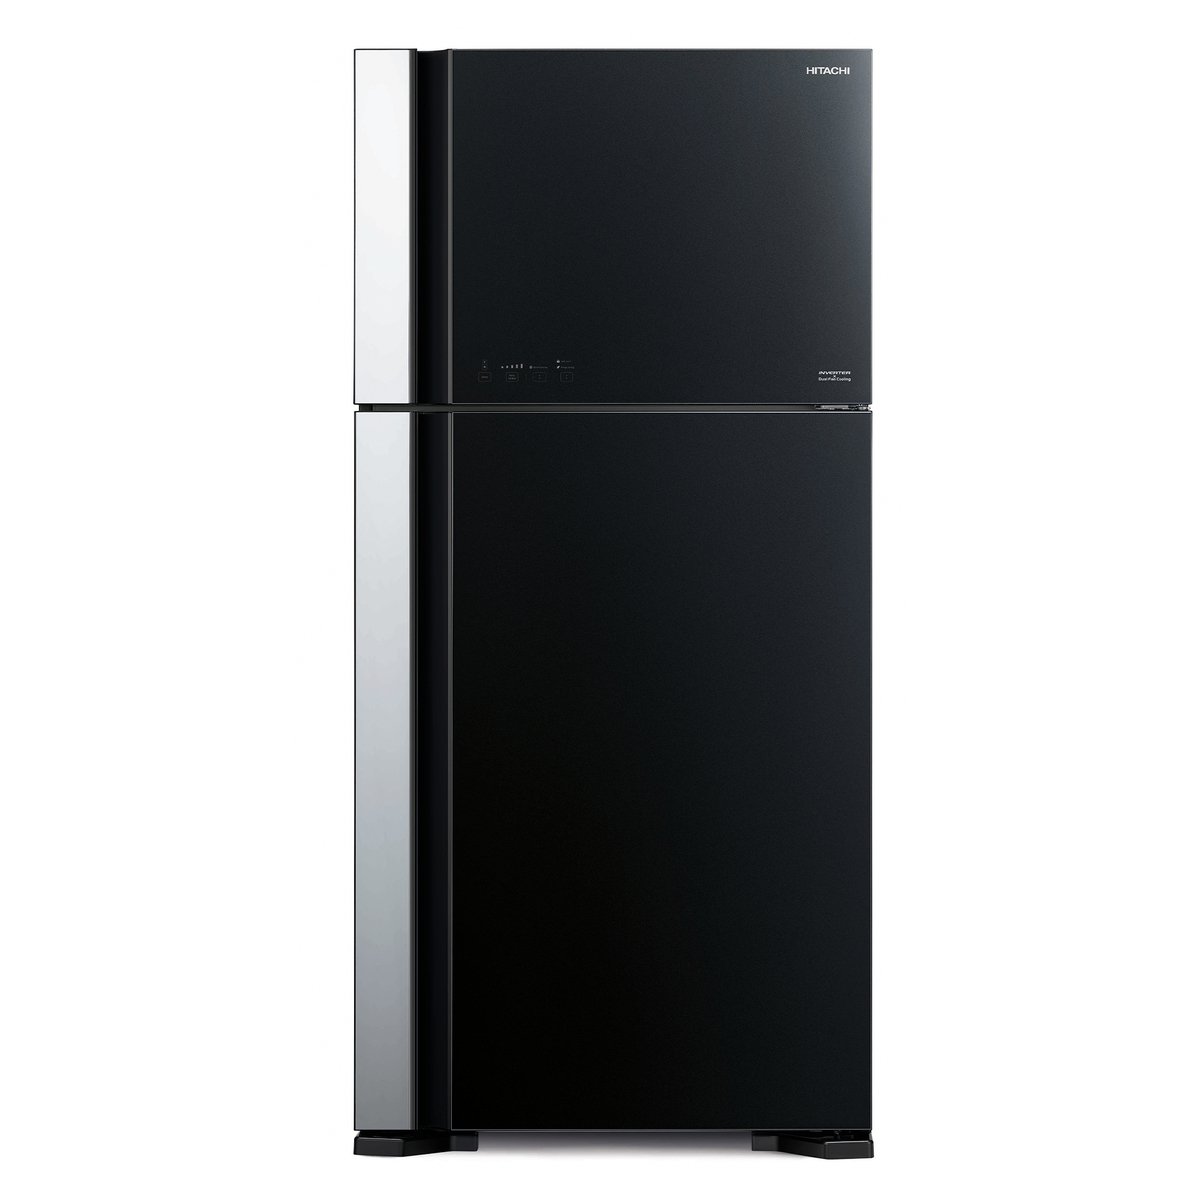 Hitachi Double Door Refrigerator RVG760PUK7 760LTR